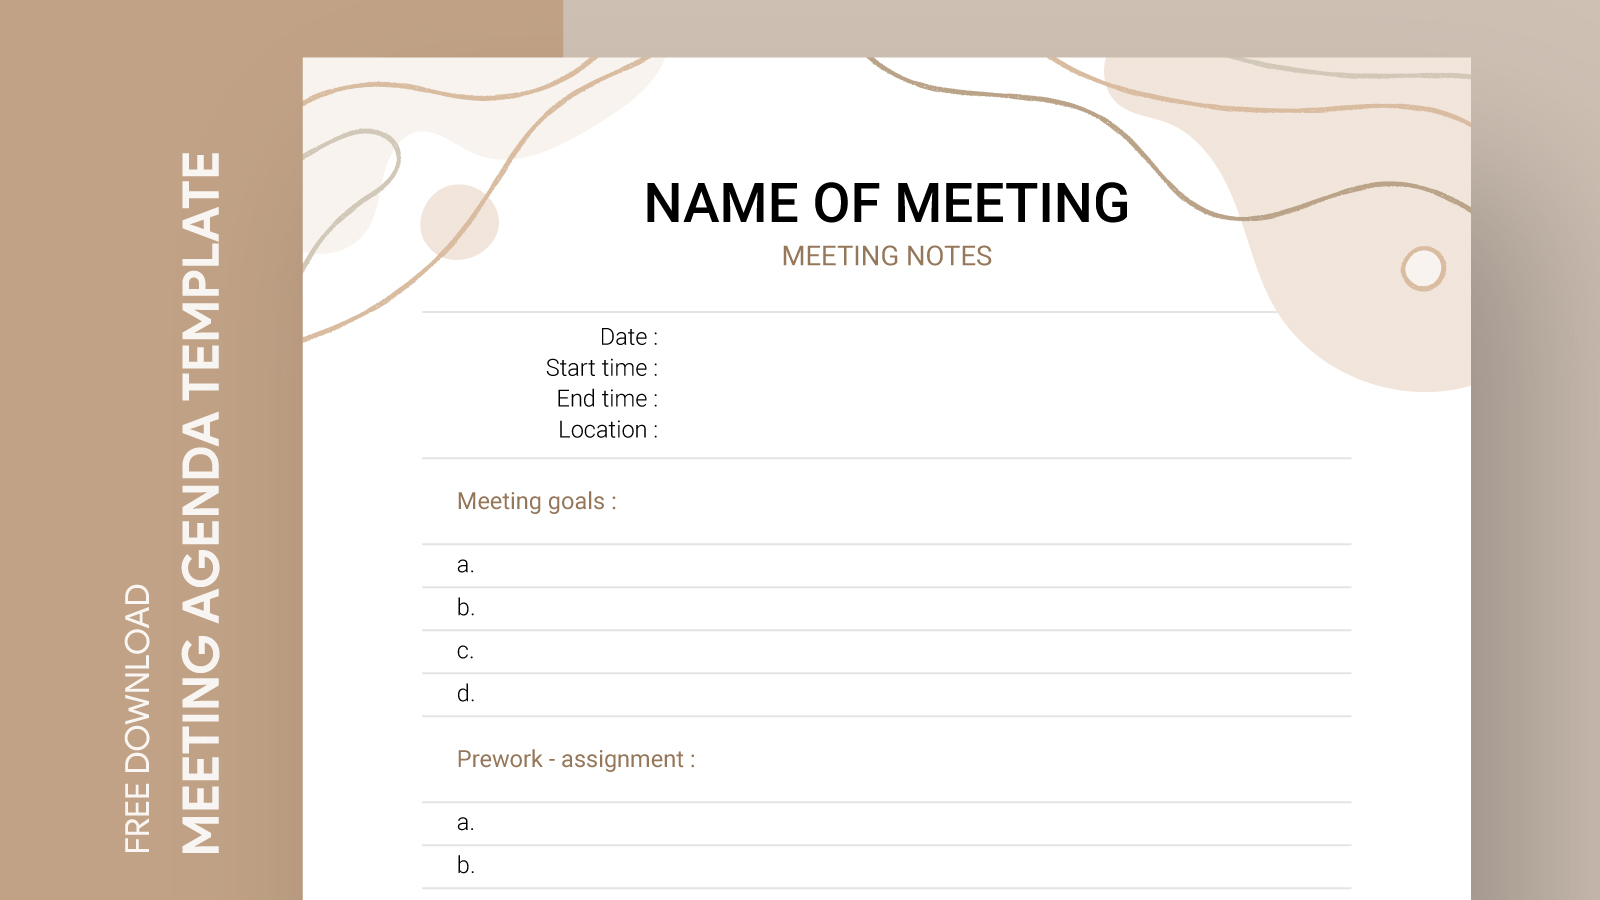 staff meeting agenda template